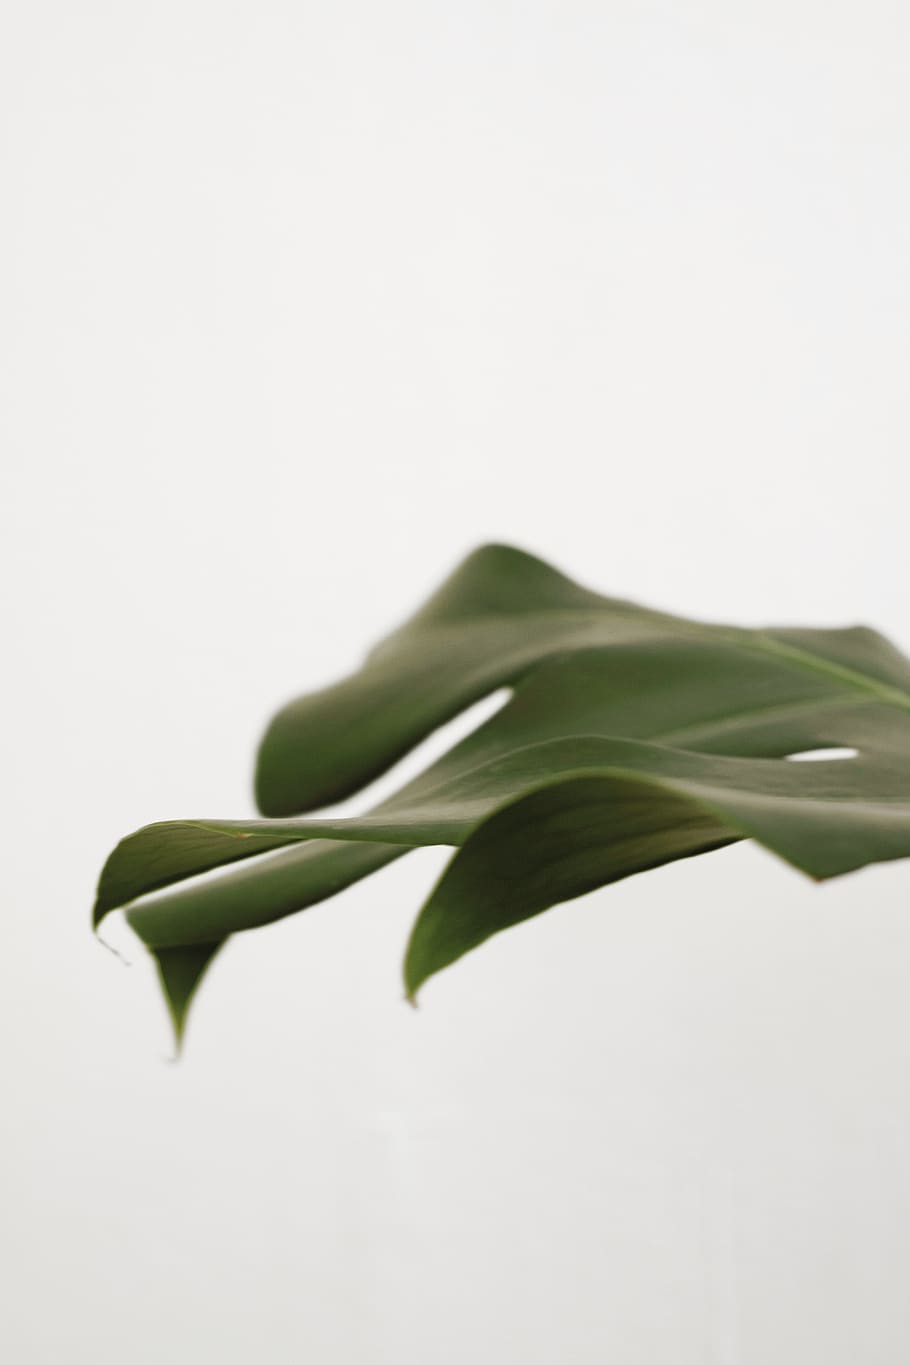 green Swiss Cheese plant leaf, studio shot, green color, plant part, HD wallpaper